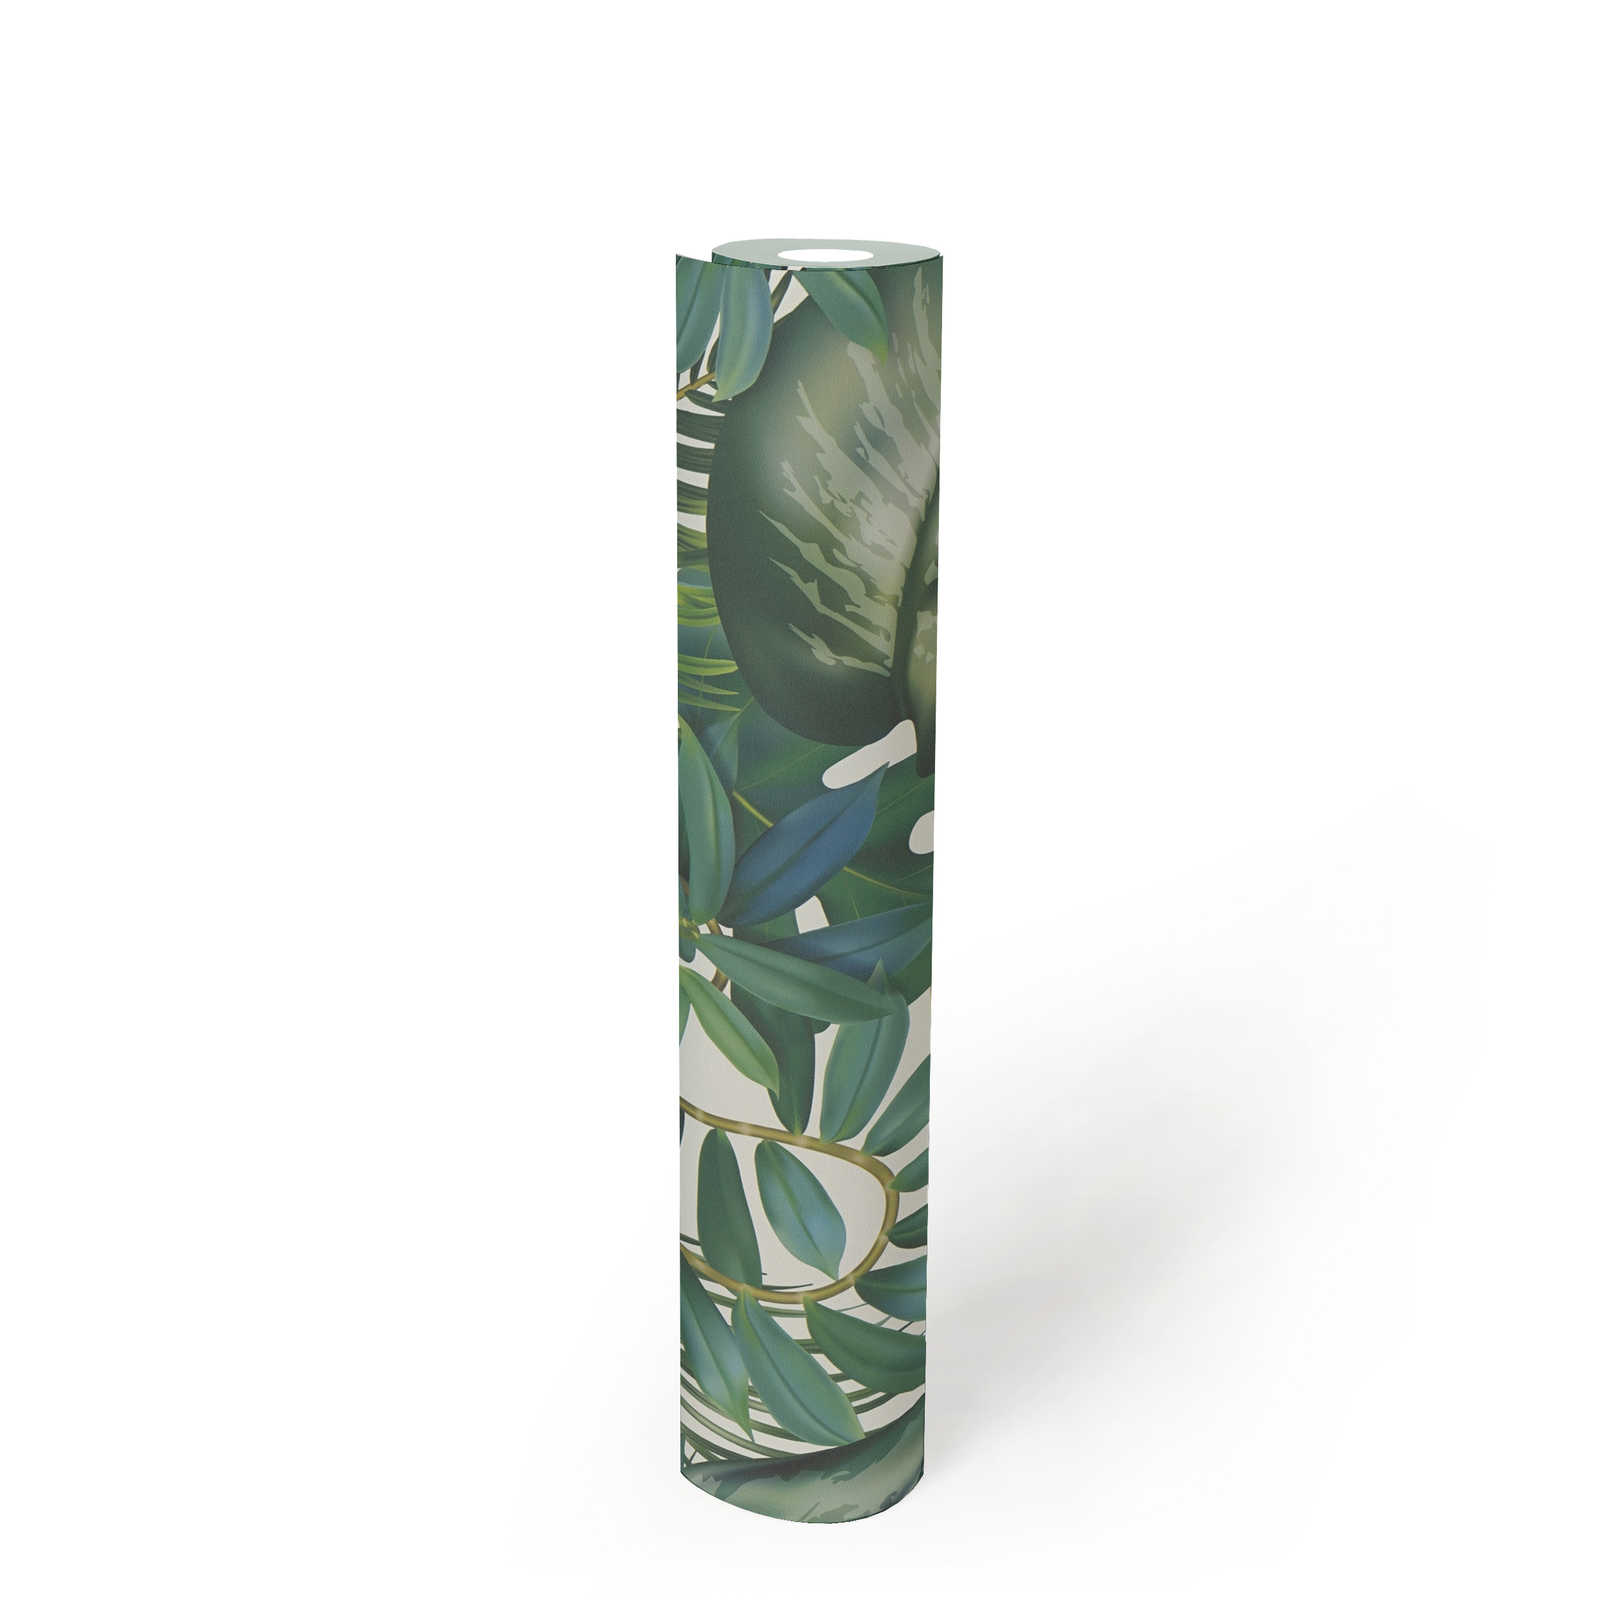             Leaves wallpaper jungle pattern - green, cream
        